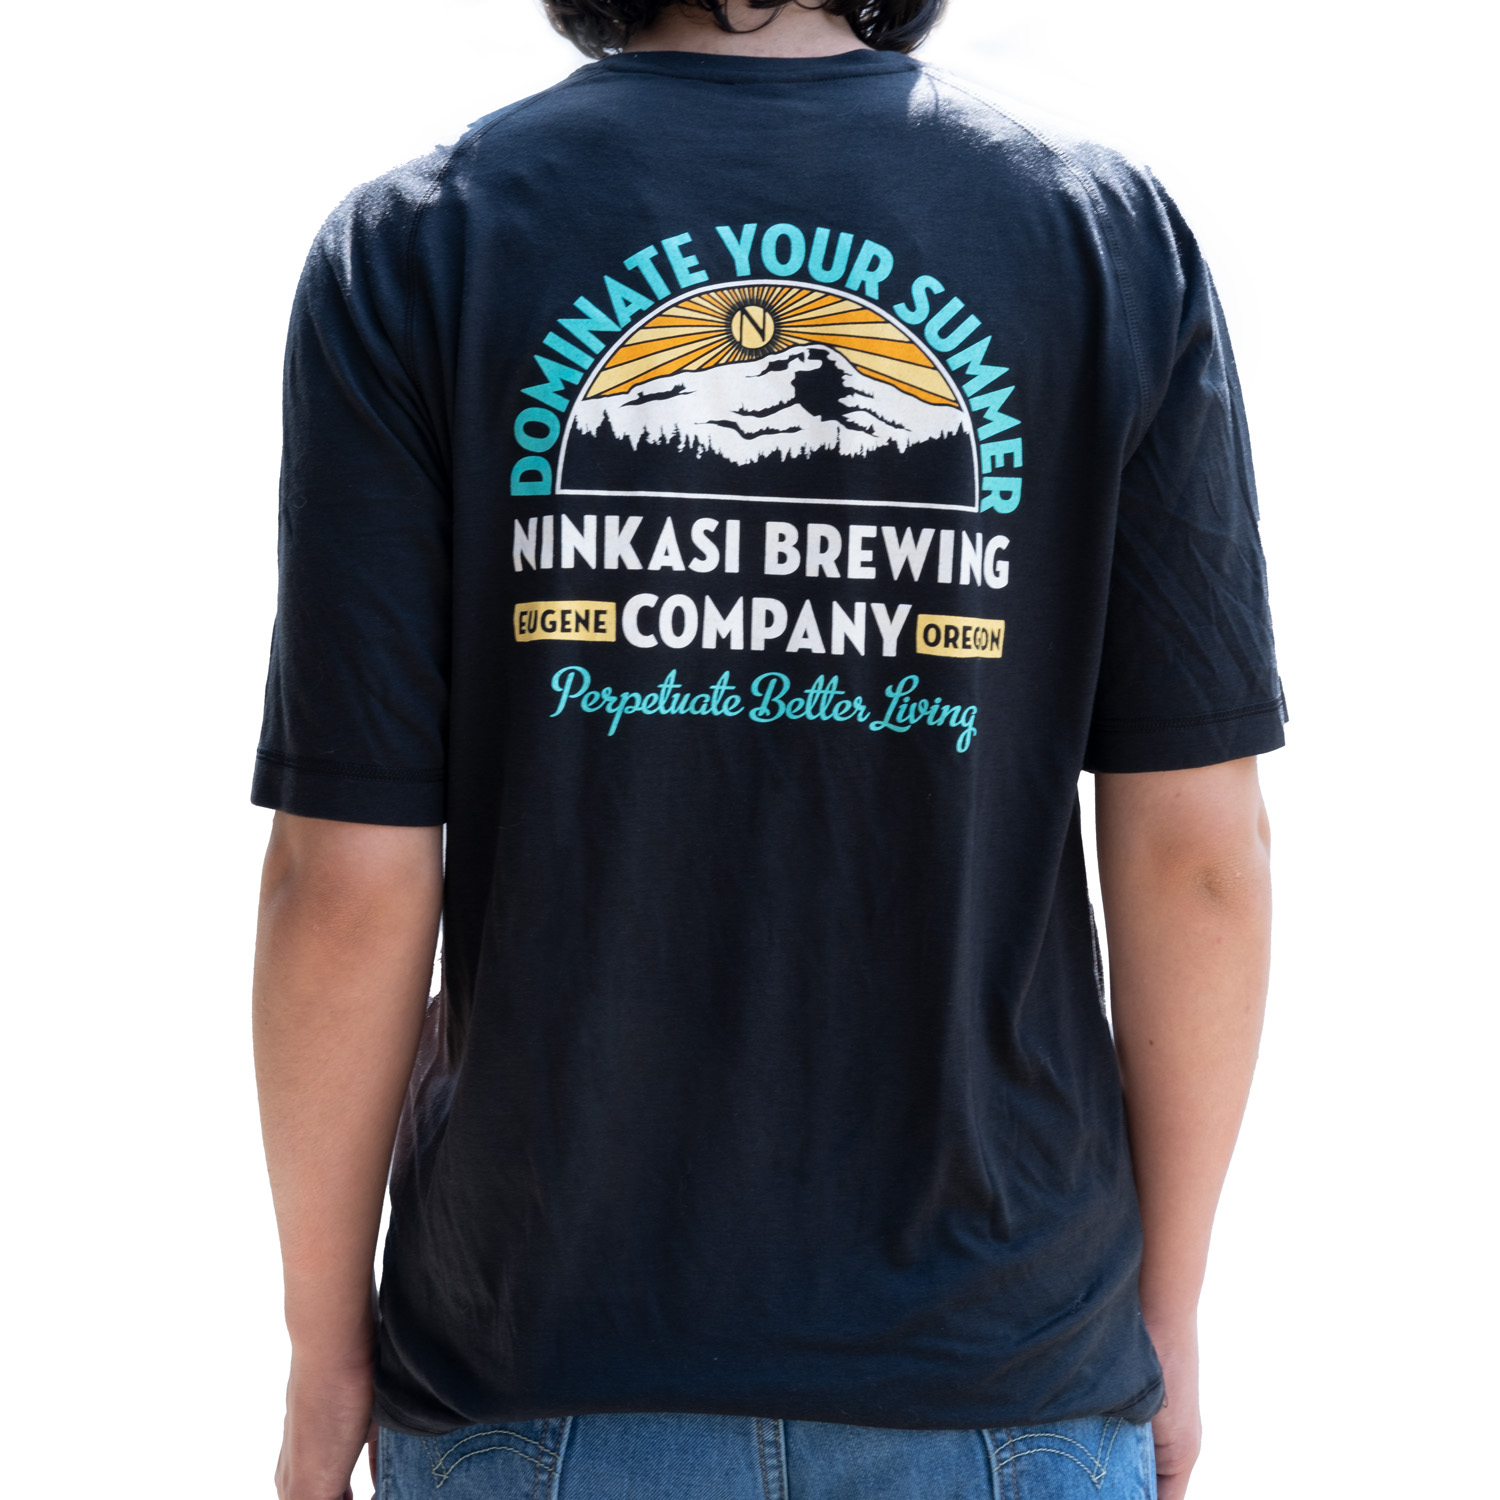 OREGON >< Since 2006 BEER BUTTON Pinback ~*~ NINKASI Brewing Company ~*~ Eugene 